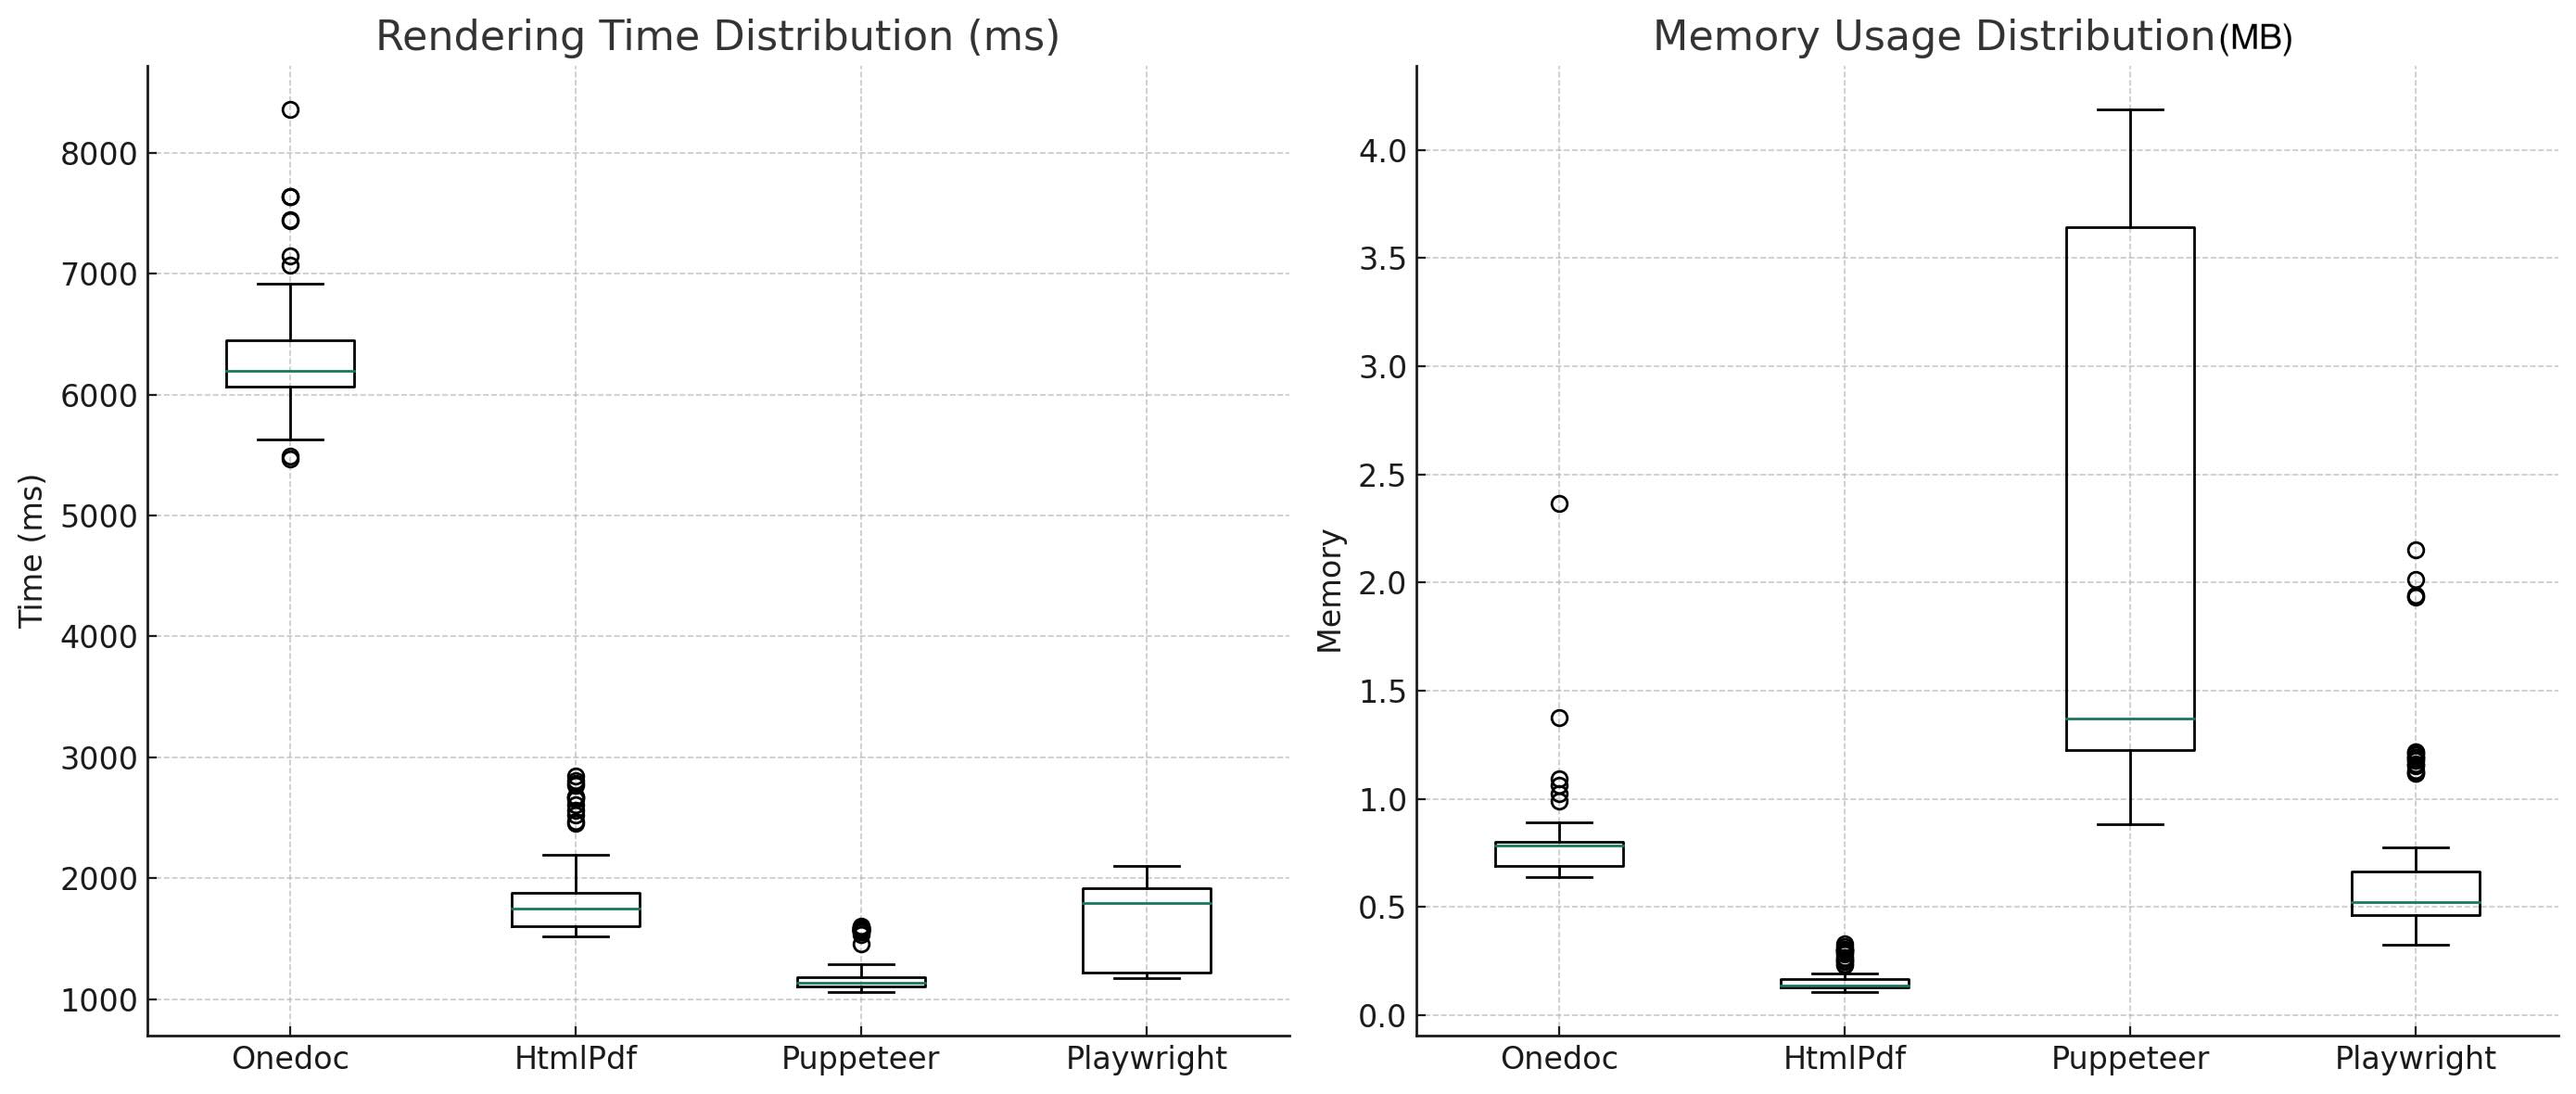 Rendering time and Memory usage analysis